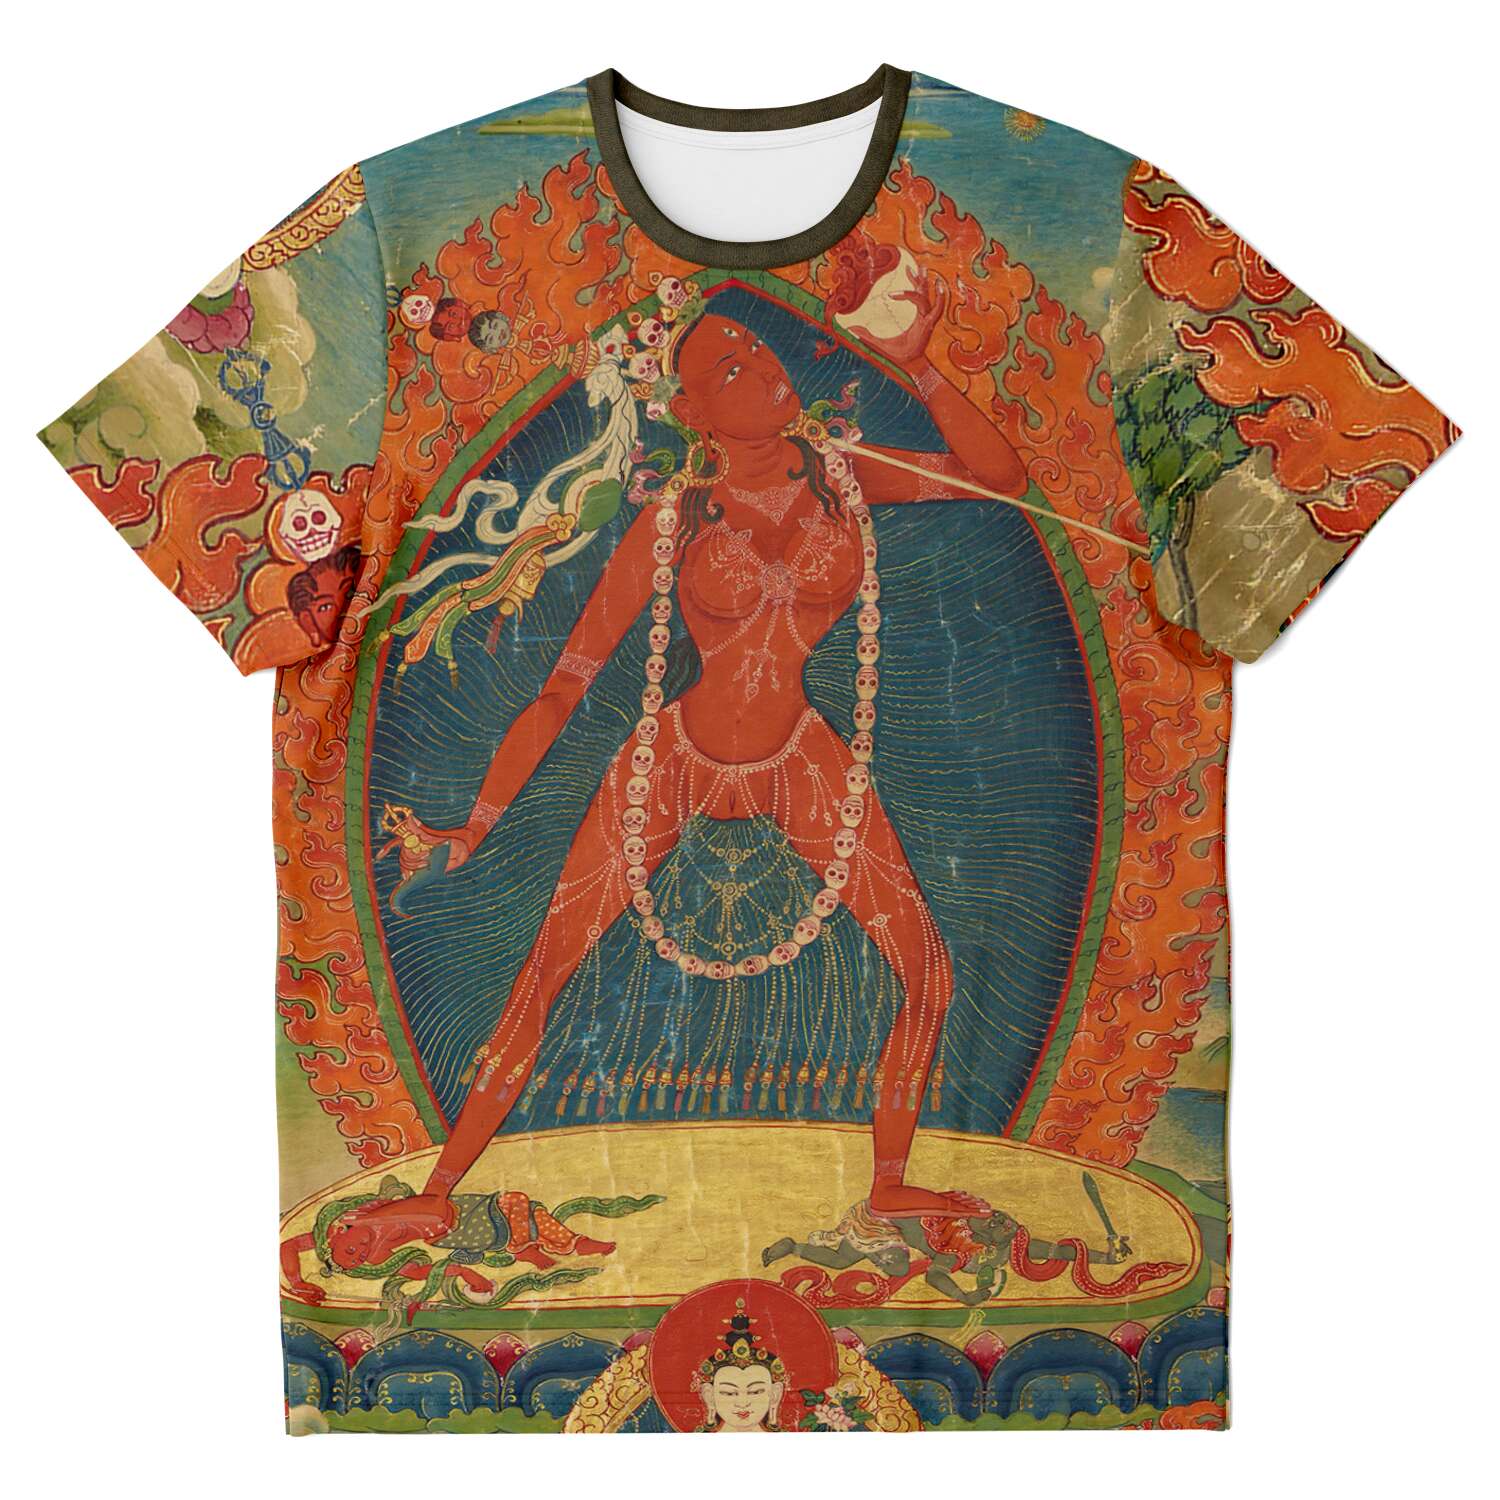 T-shirt XS Vajrayogini Tibetan Vajrayana Thangka Erotic Tantric Tantra Deity Goddess Feminist Buddhist Mahayana Vintage Antique Art T-Shirt Tee